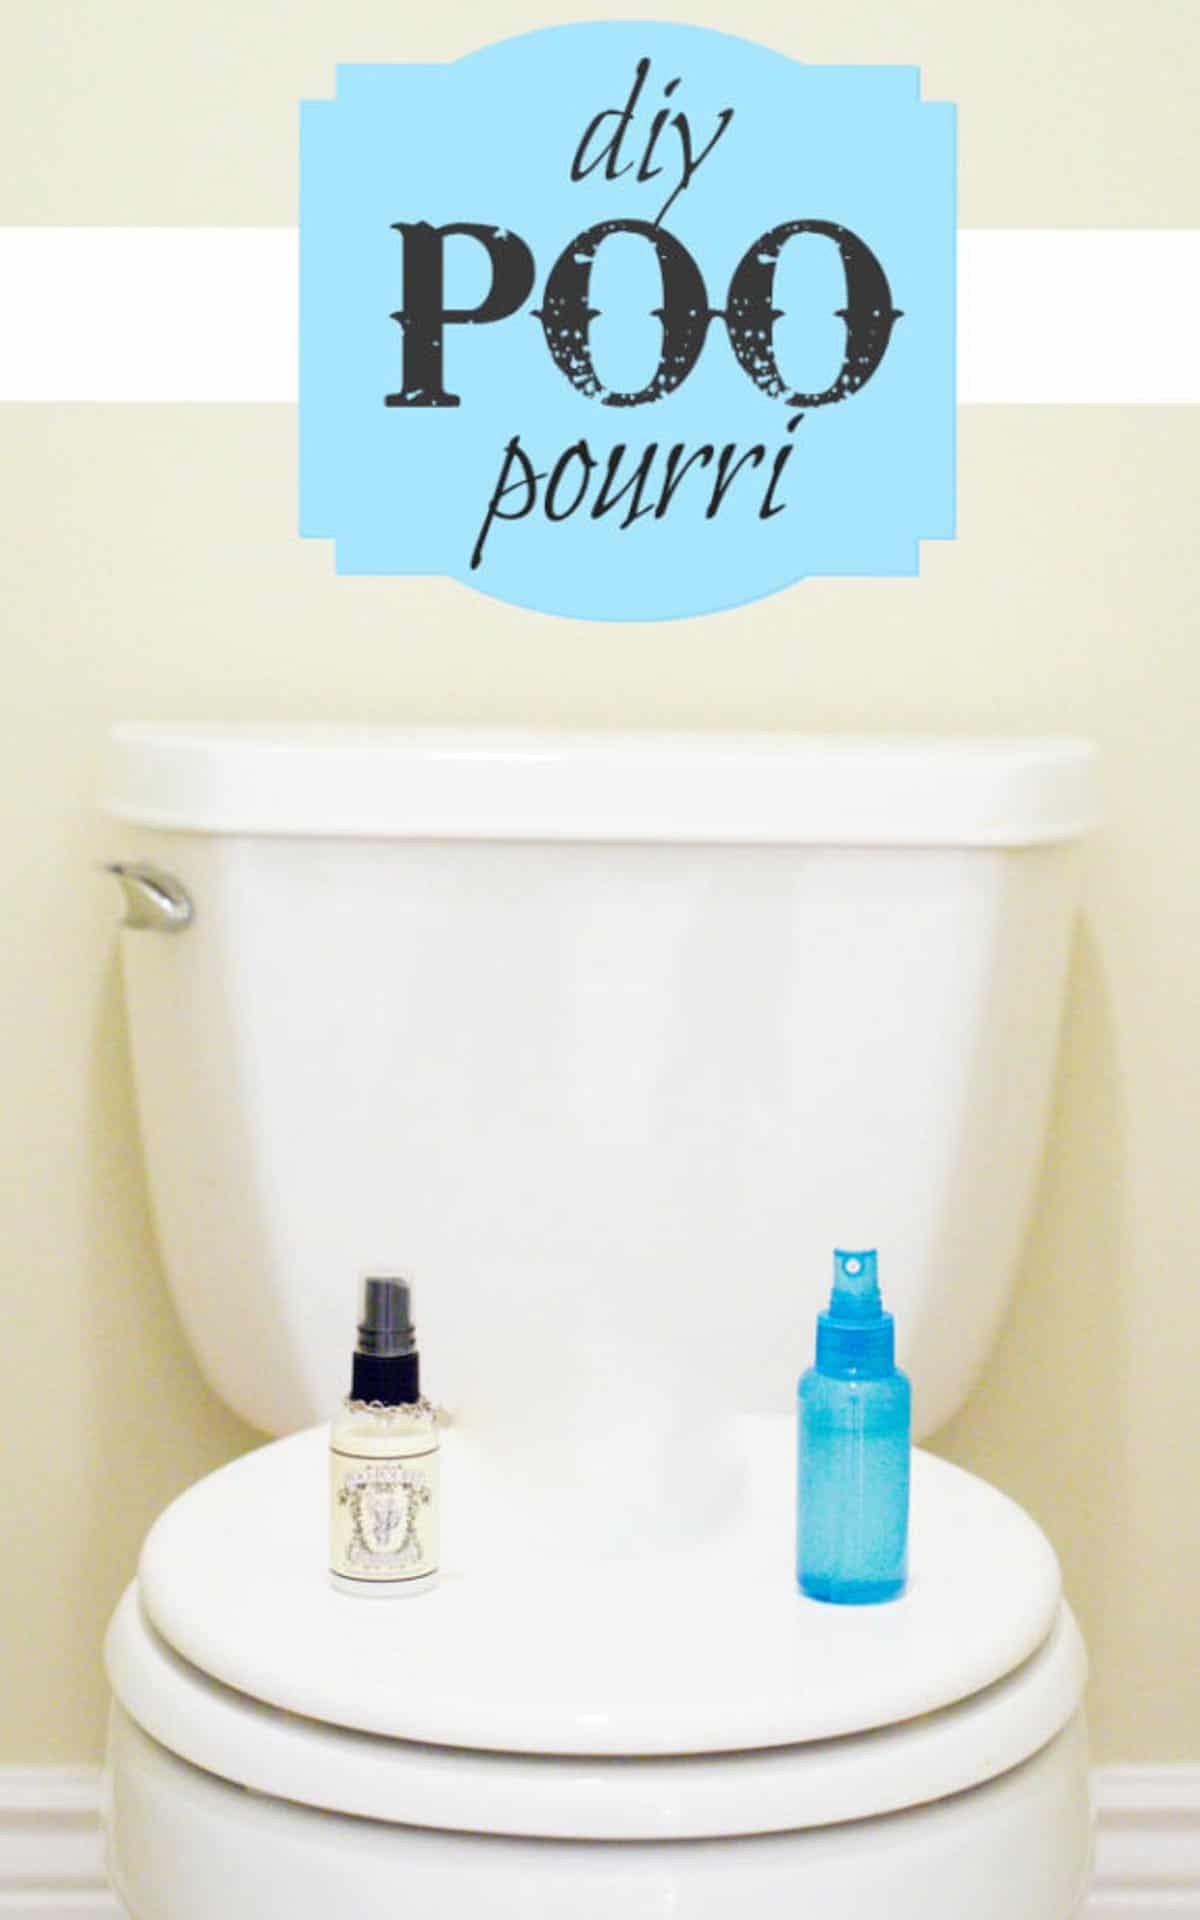 diy poo pourri recipe to save money & get rid of that stink!